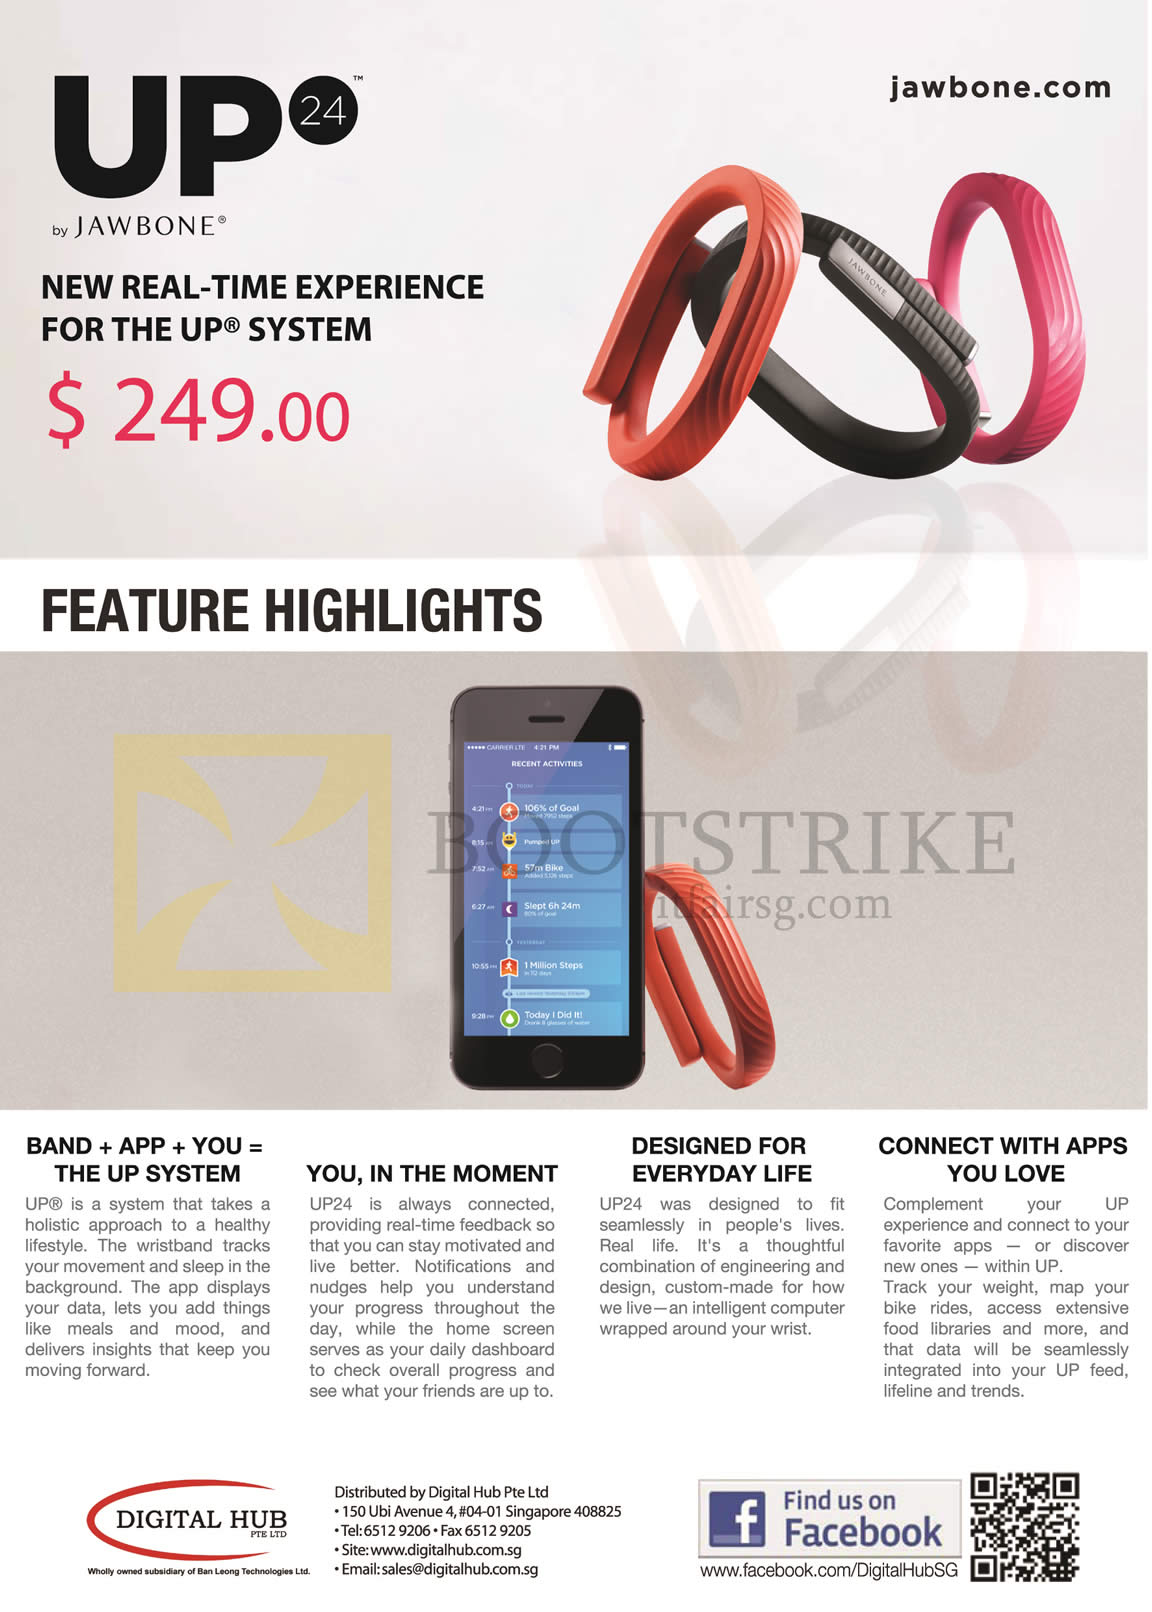 PC SHOW 2014 price list image brochure of Digital Hub Jawbone Up 24 Wristband